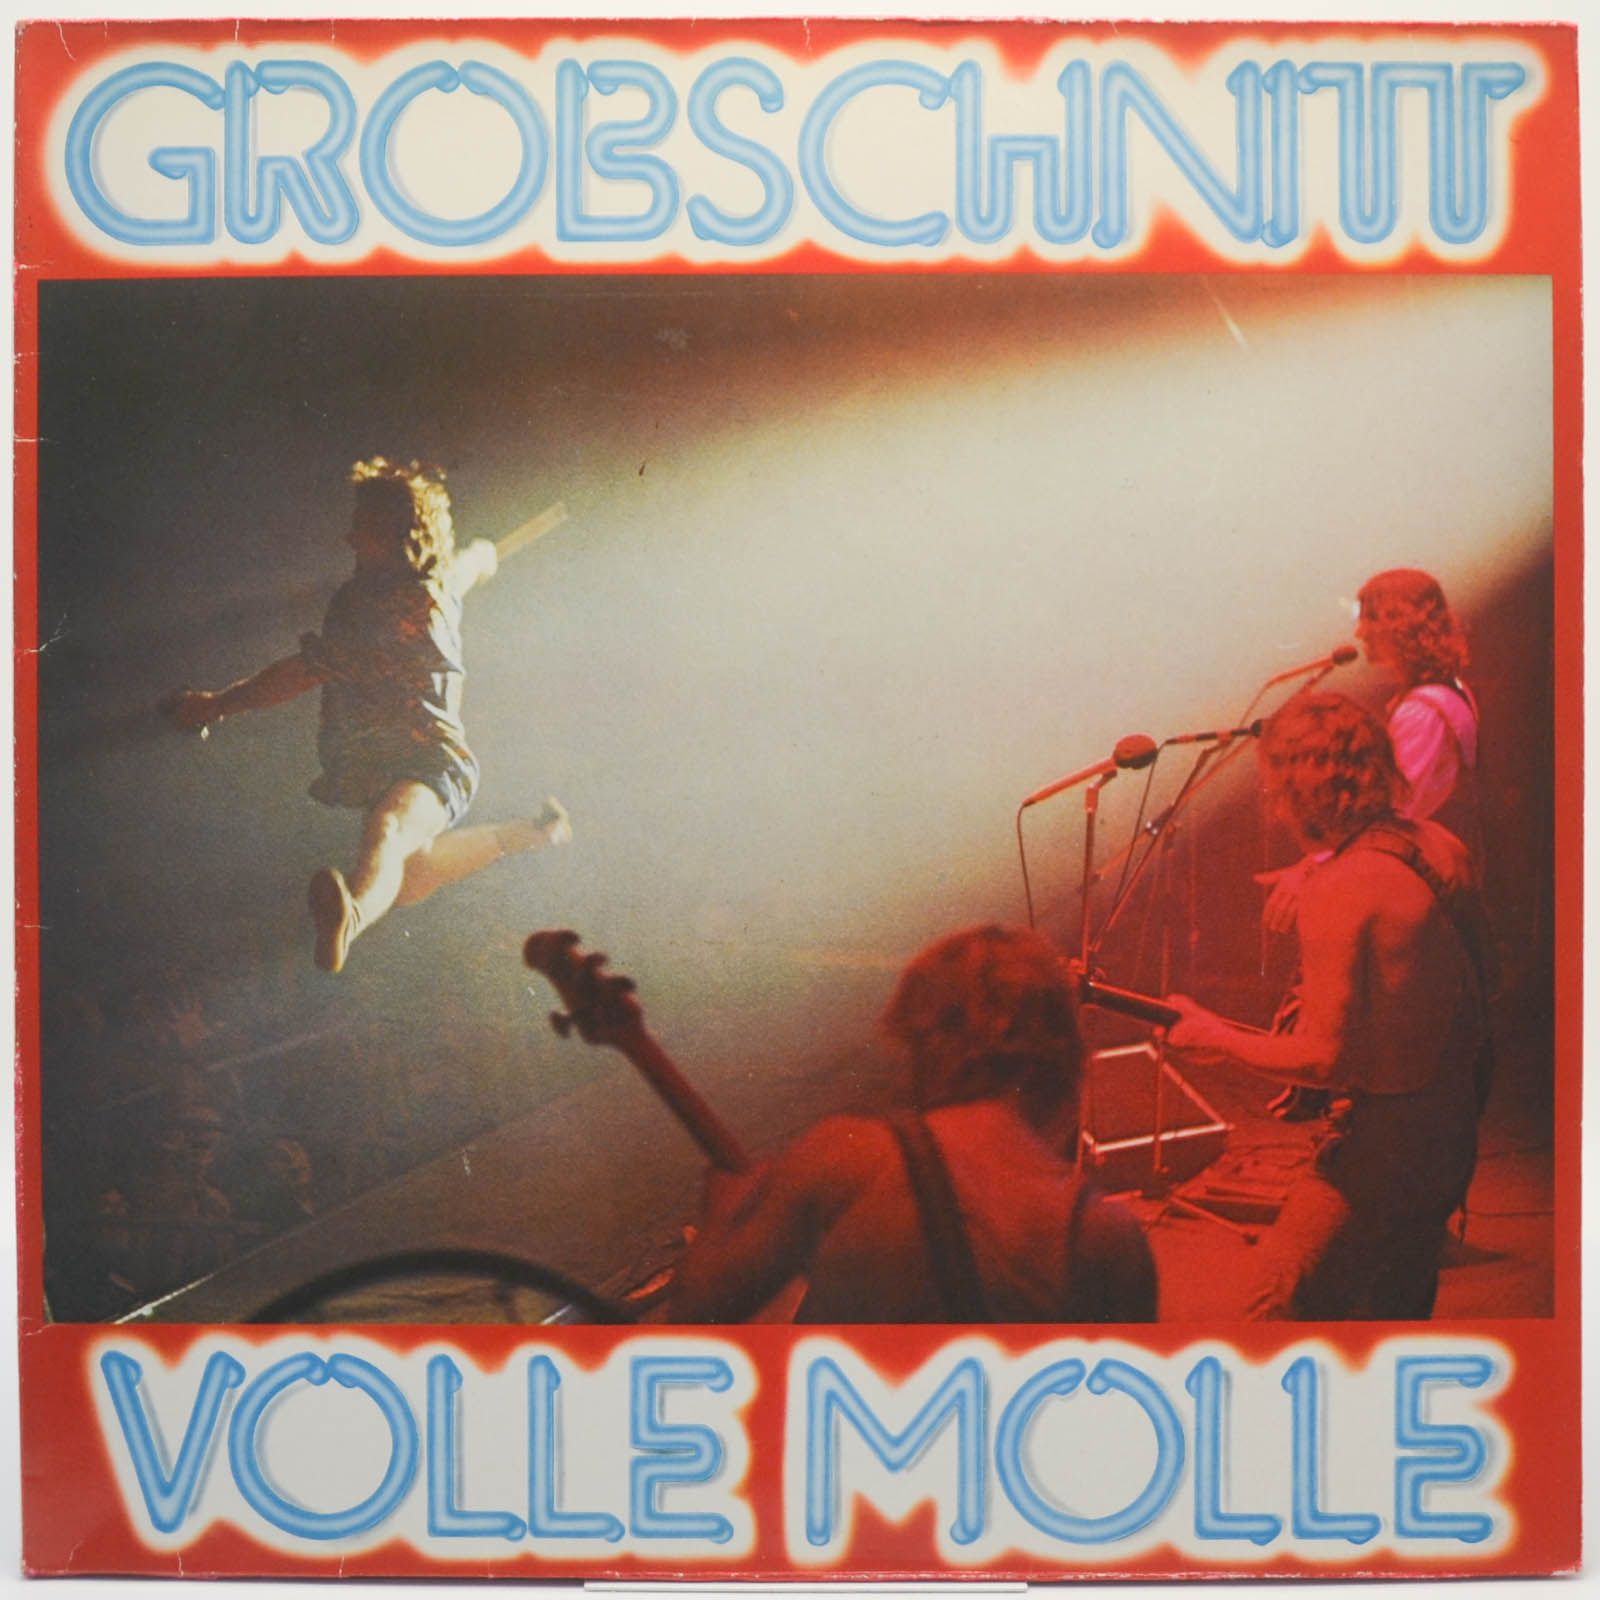 Grobschnitt — Volle Molle, 1980